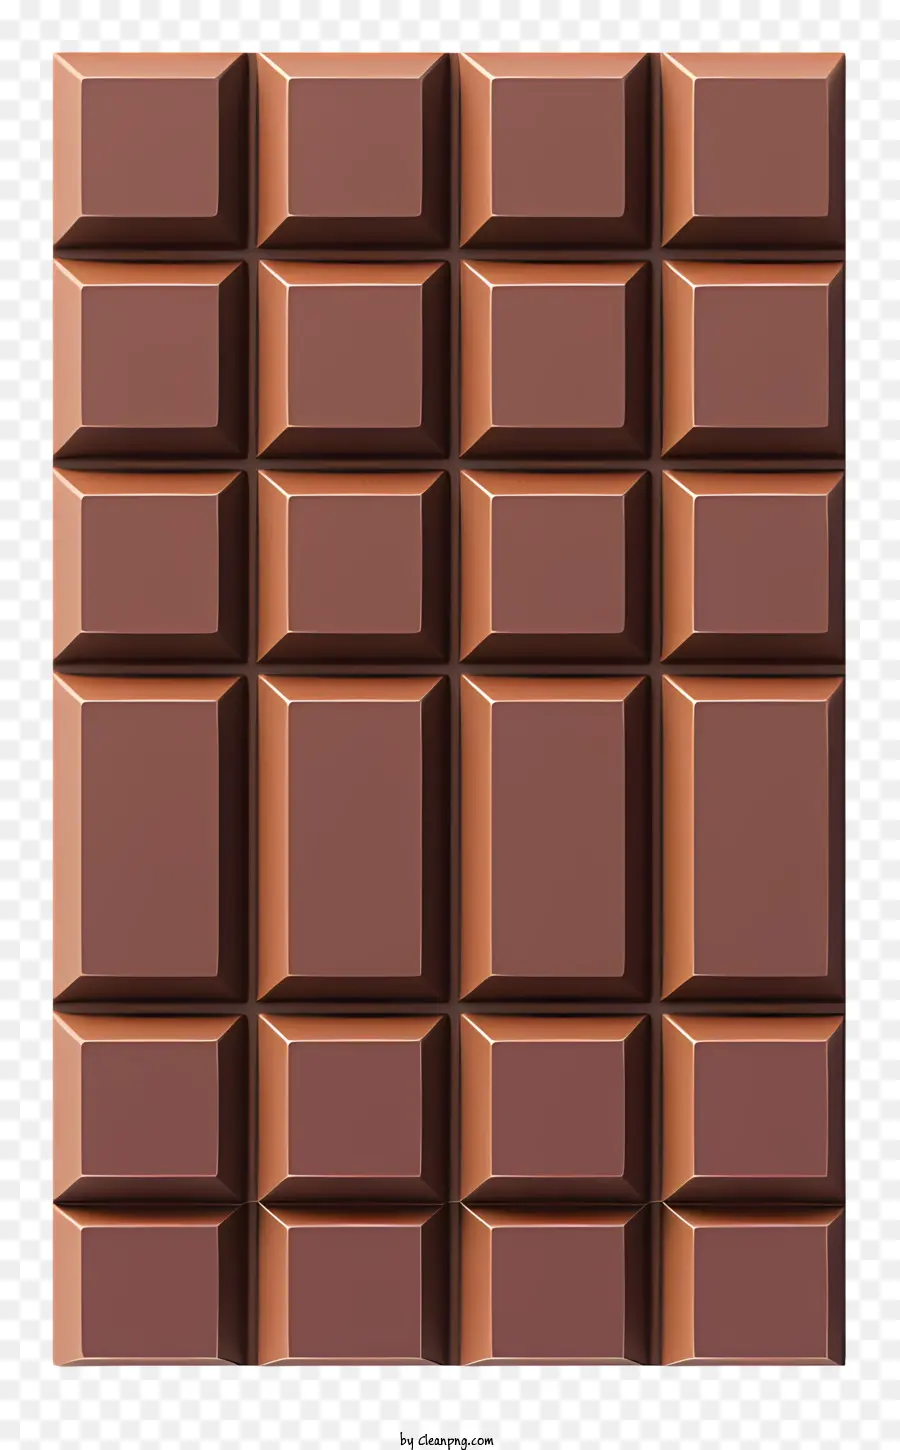 3d chocolate bar chocolate bar pattern brown square chocolate raised chocolate squares chocolate bar texture